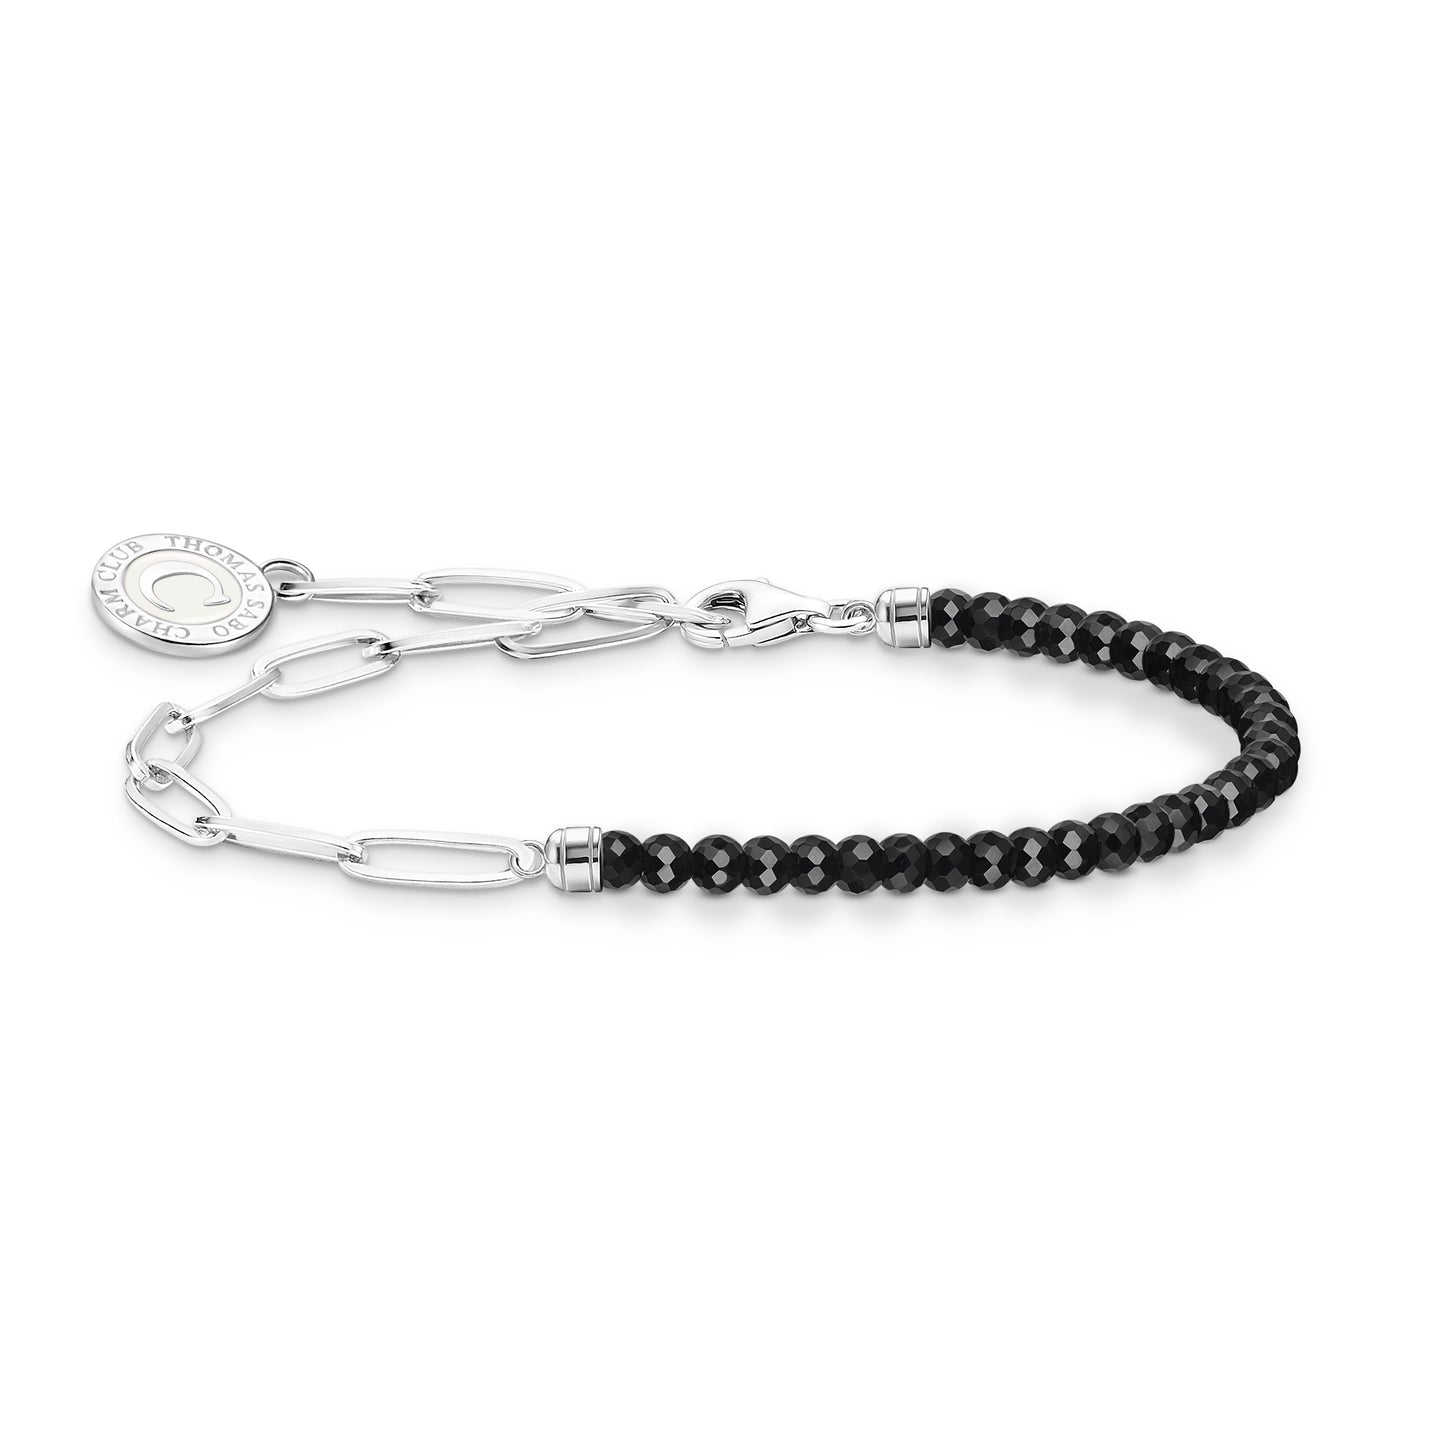 Thomas Sabo Charmista Black and Silver Bracelet A2131-148-11